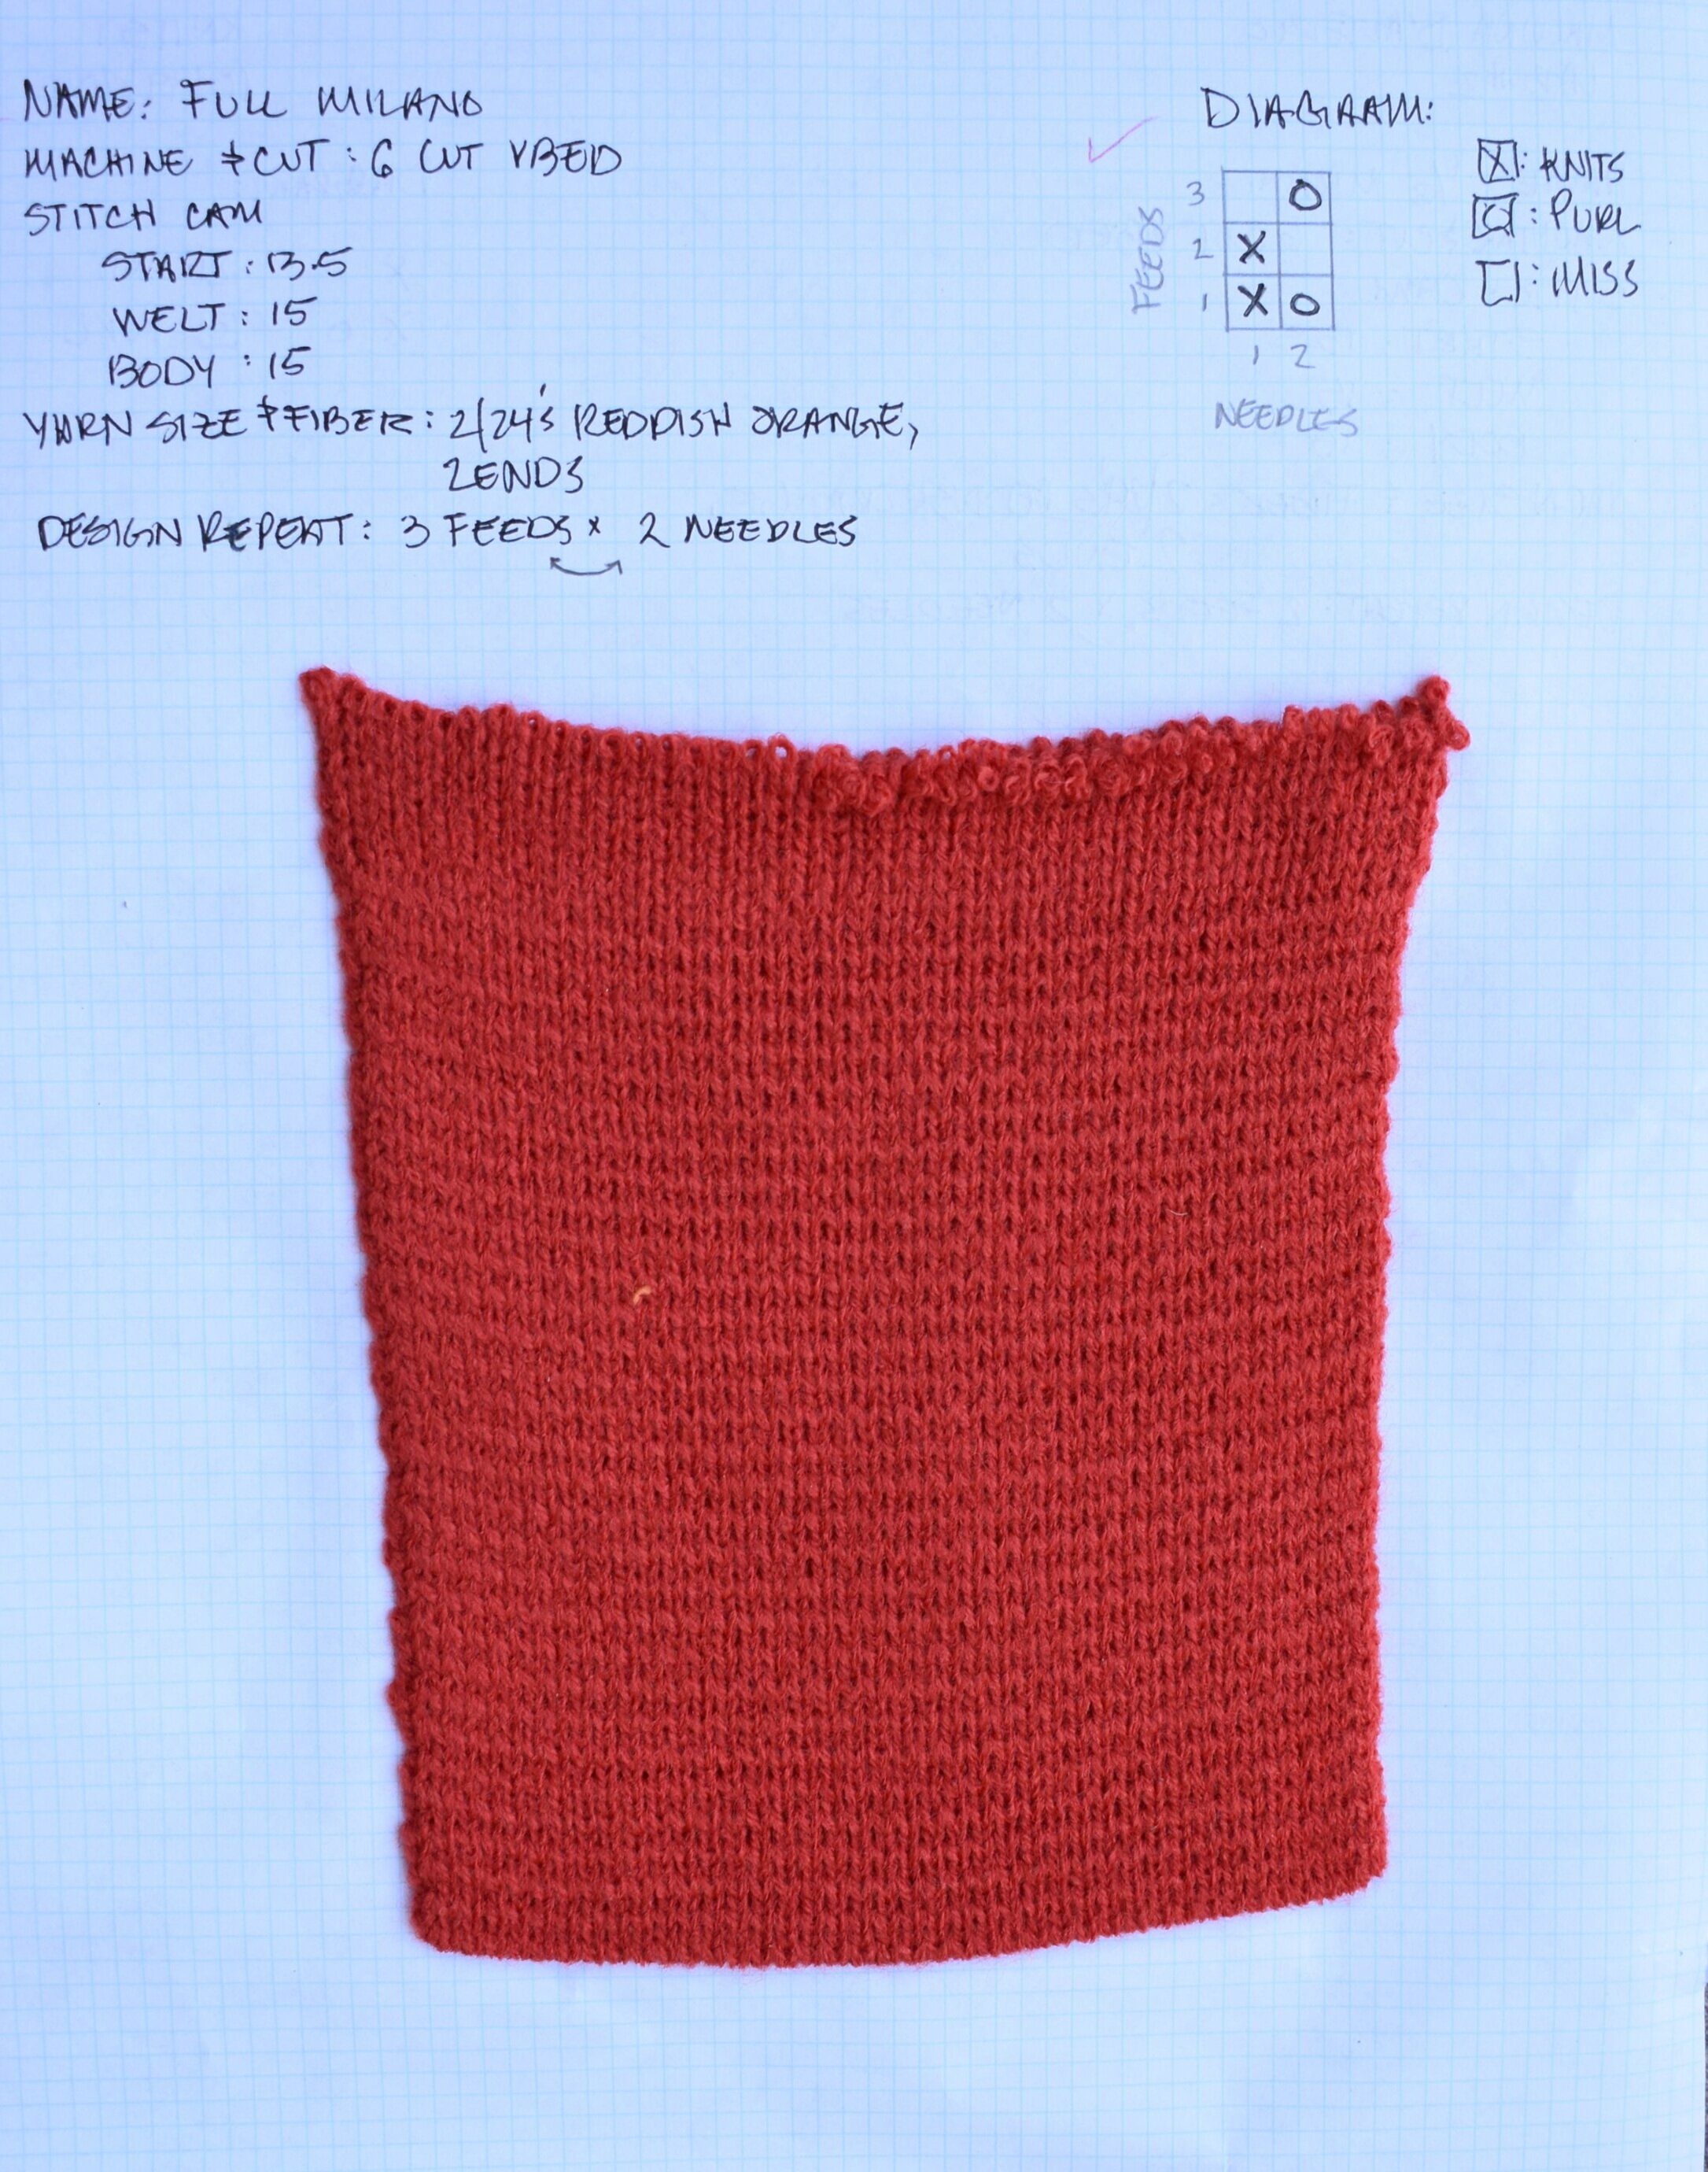 "Full Milano" Machine Knitting Pattern Sample